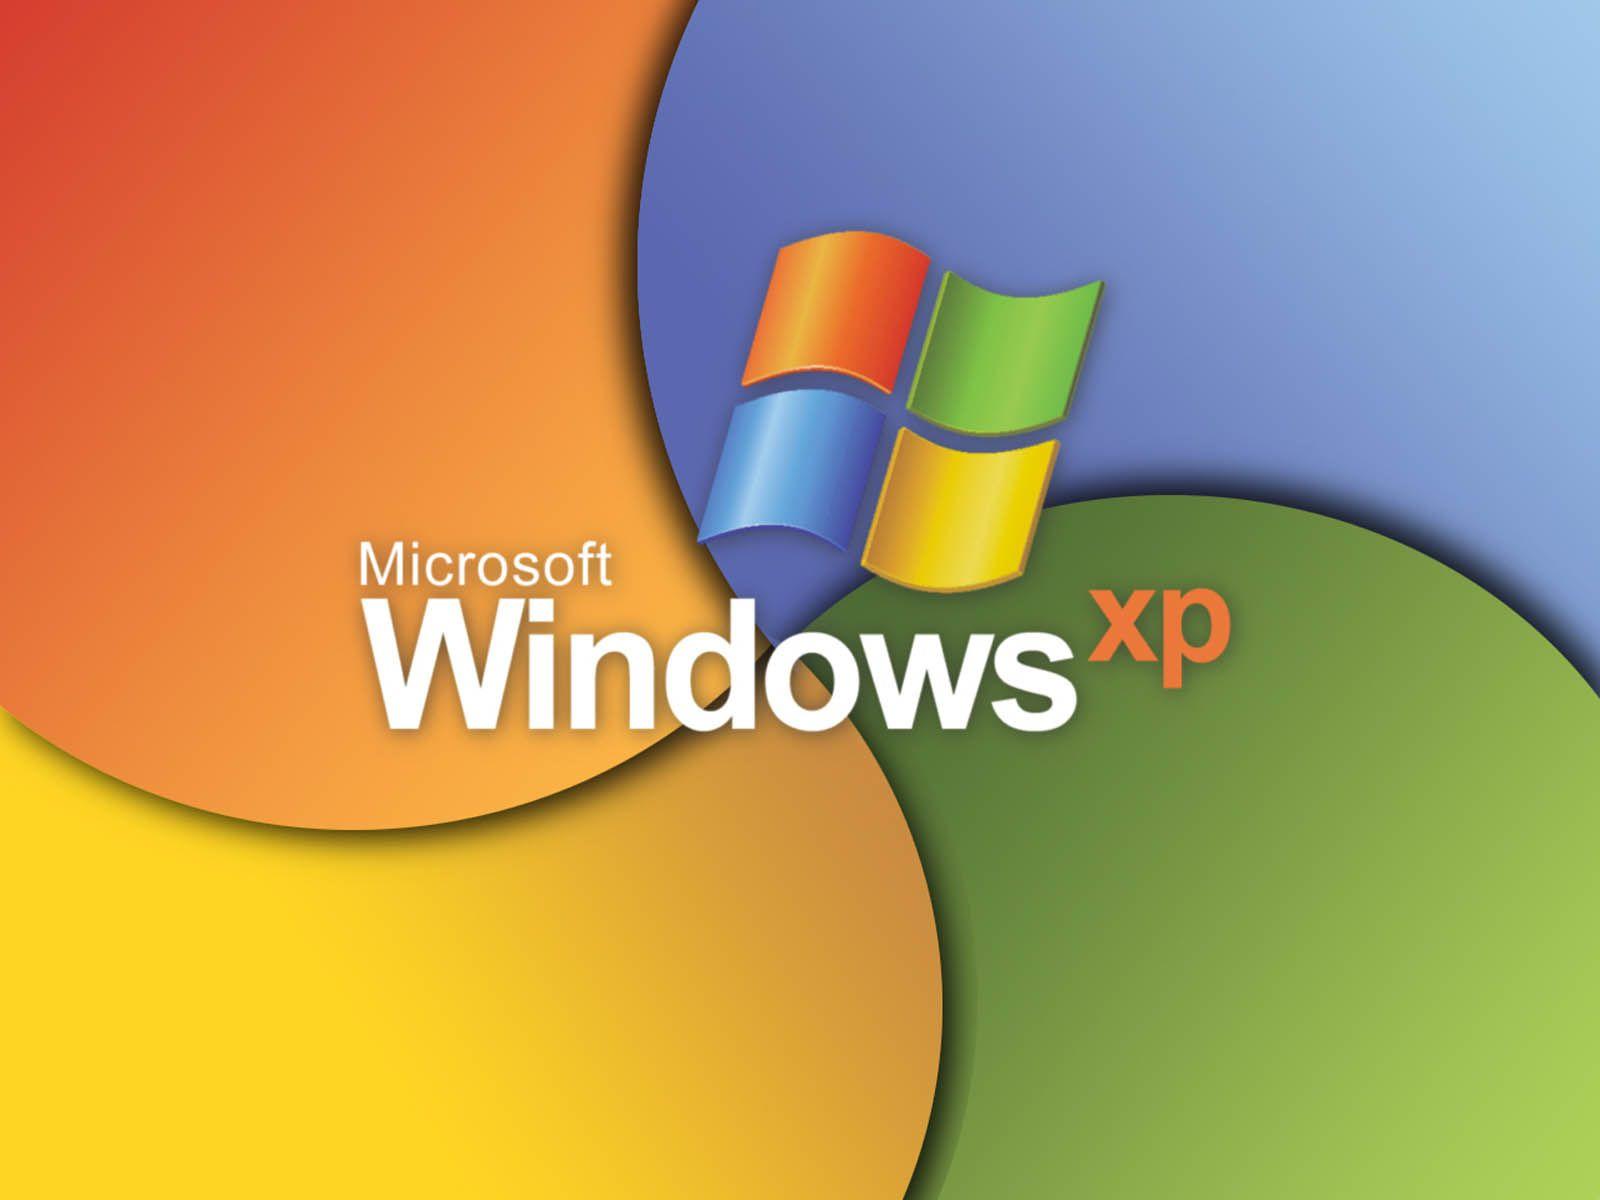 Download 45 HD Windows XP Wallpaper for Free